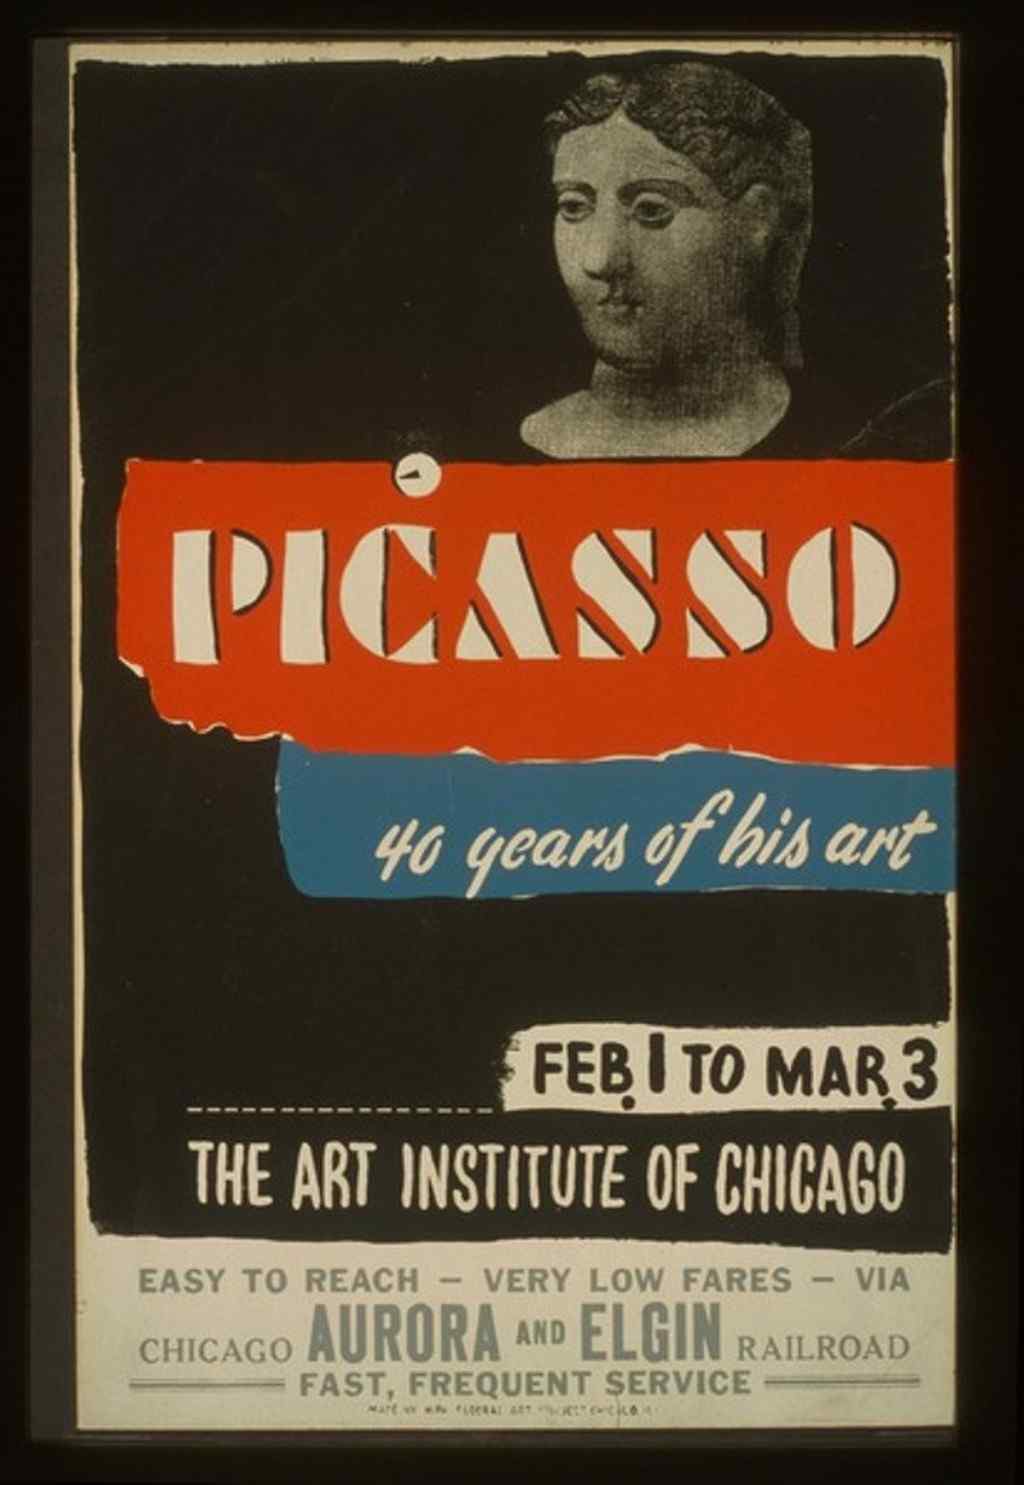 Pablo Picasso ve eserleri uzerine bir retrospektif sanat sergisi afisi